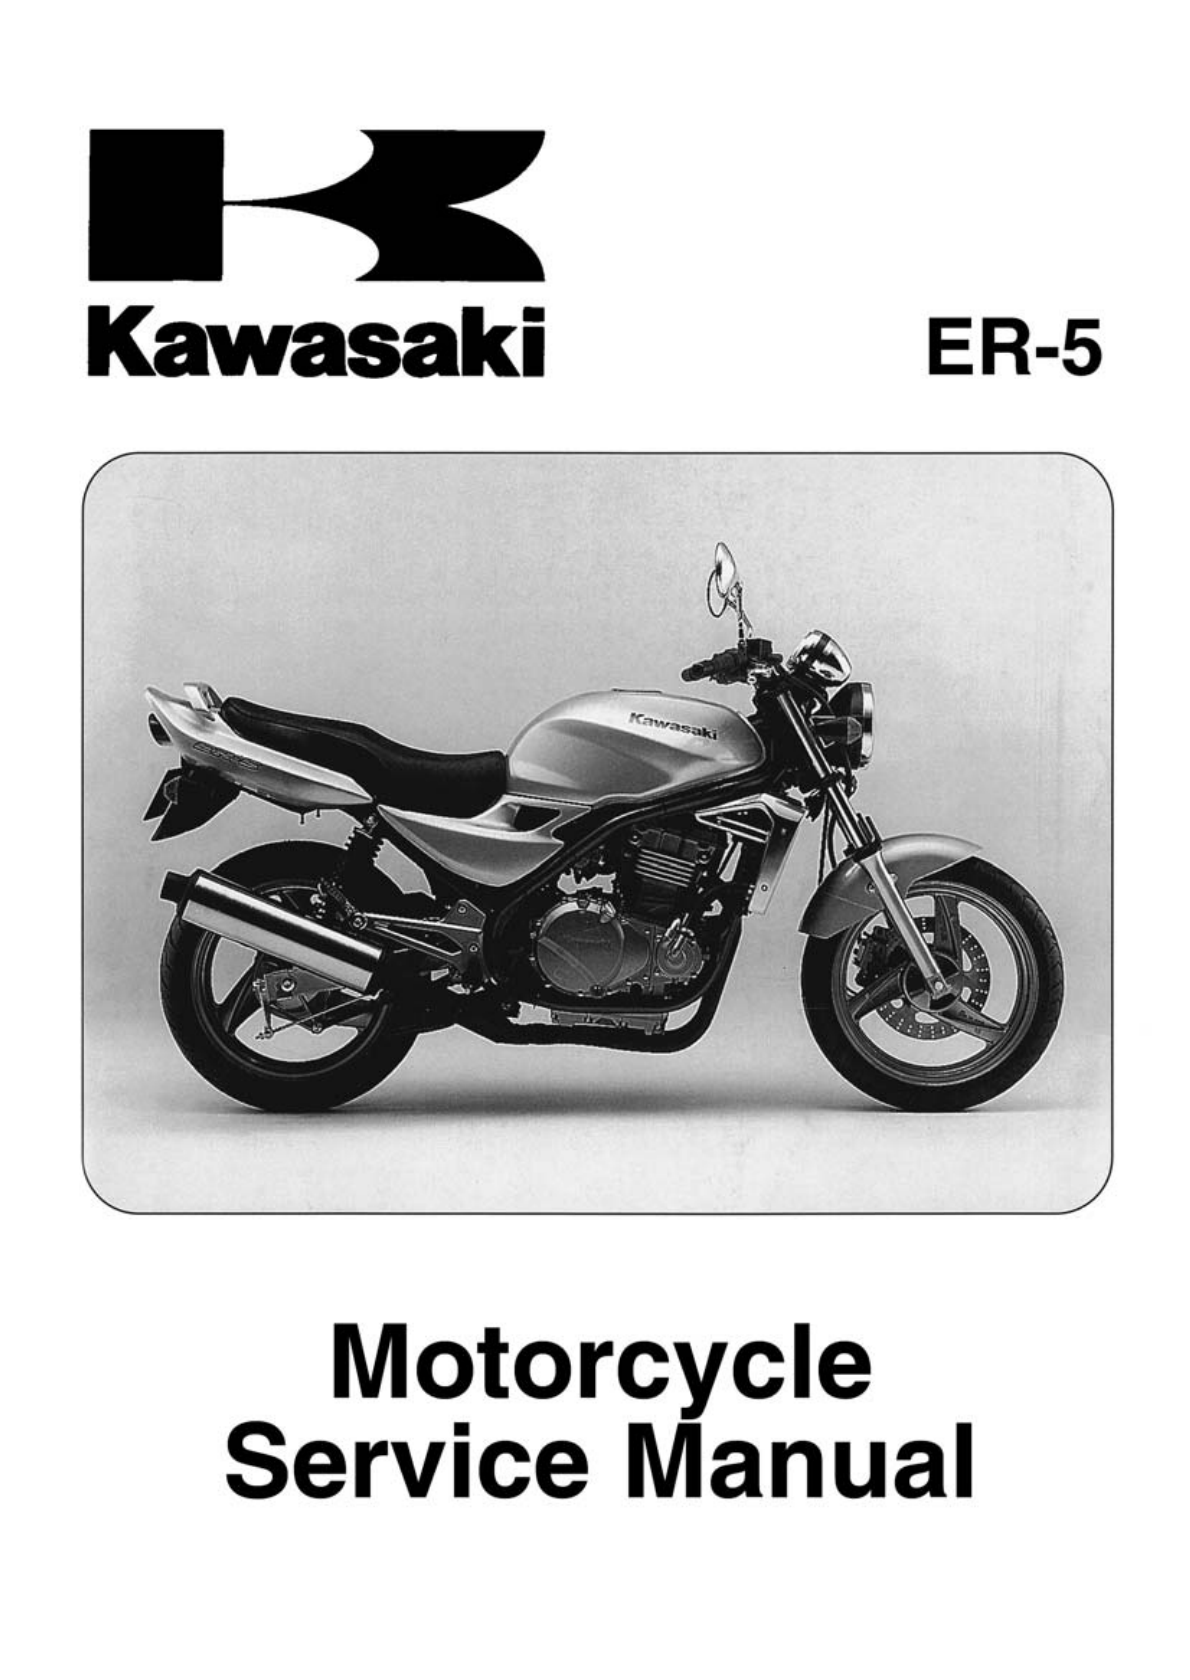 Manual Kawasaki ER-5 44 of 334) (English)